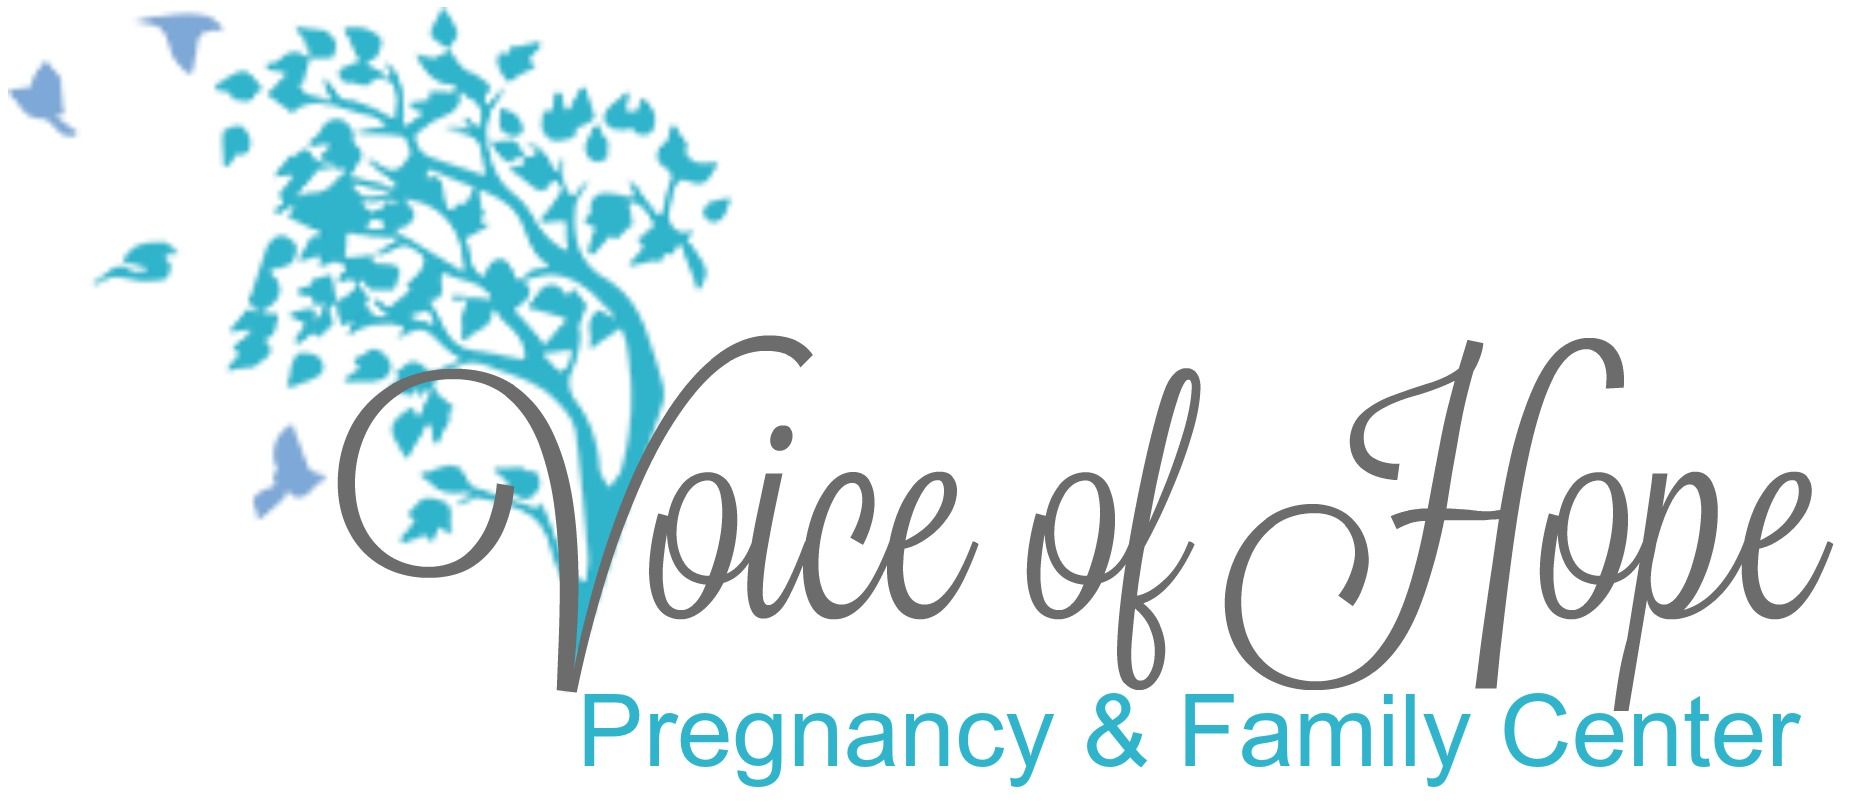 Voice of Hope logo